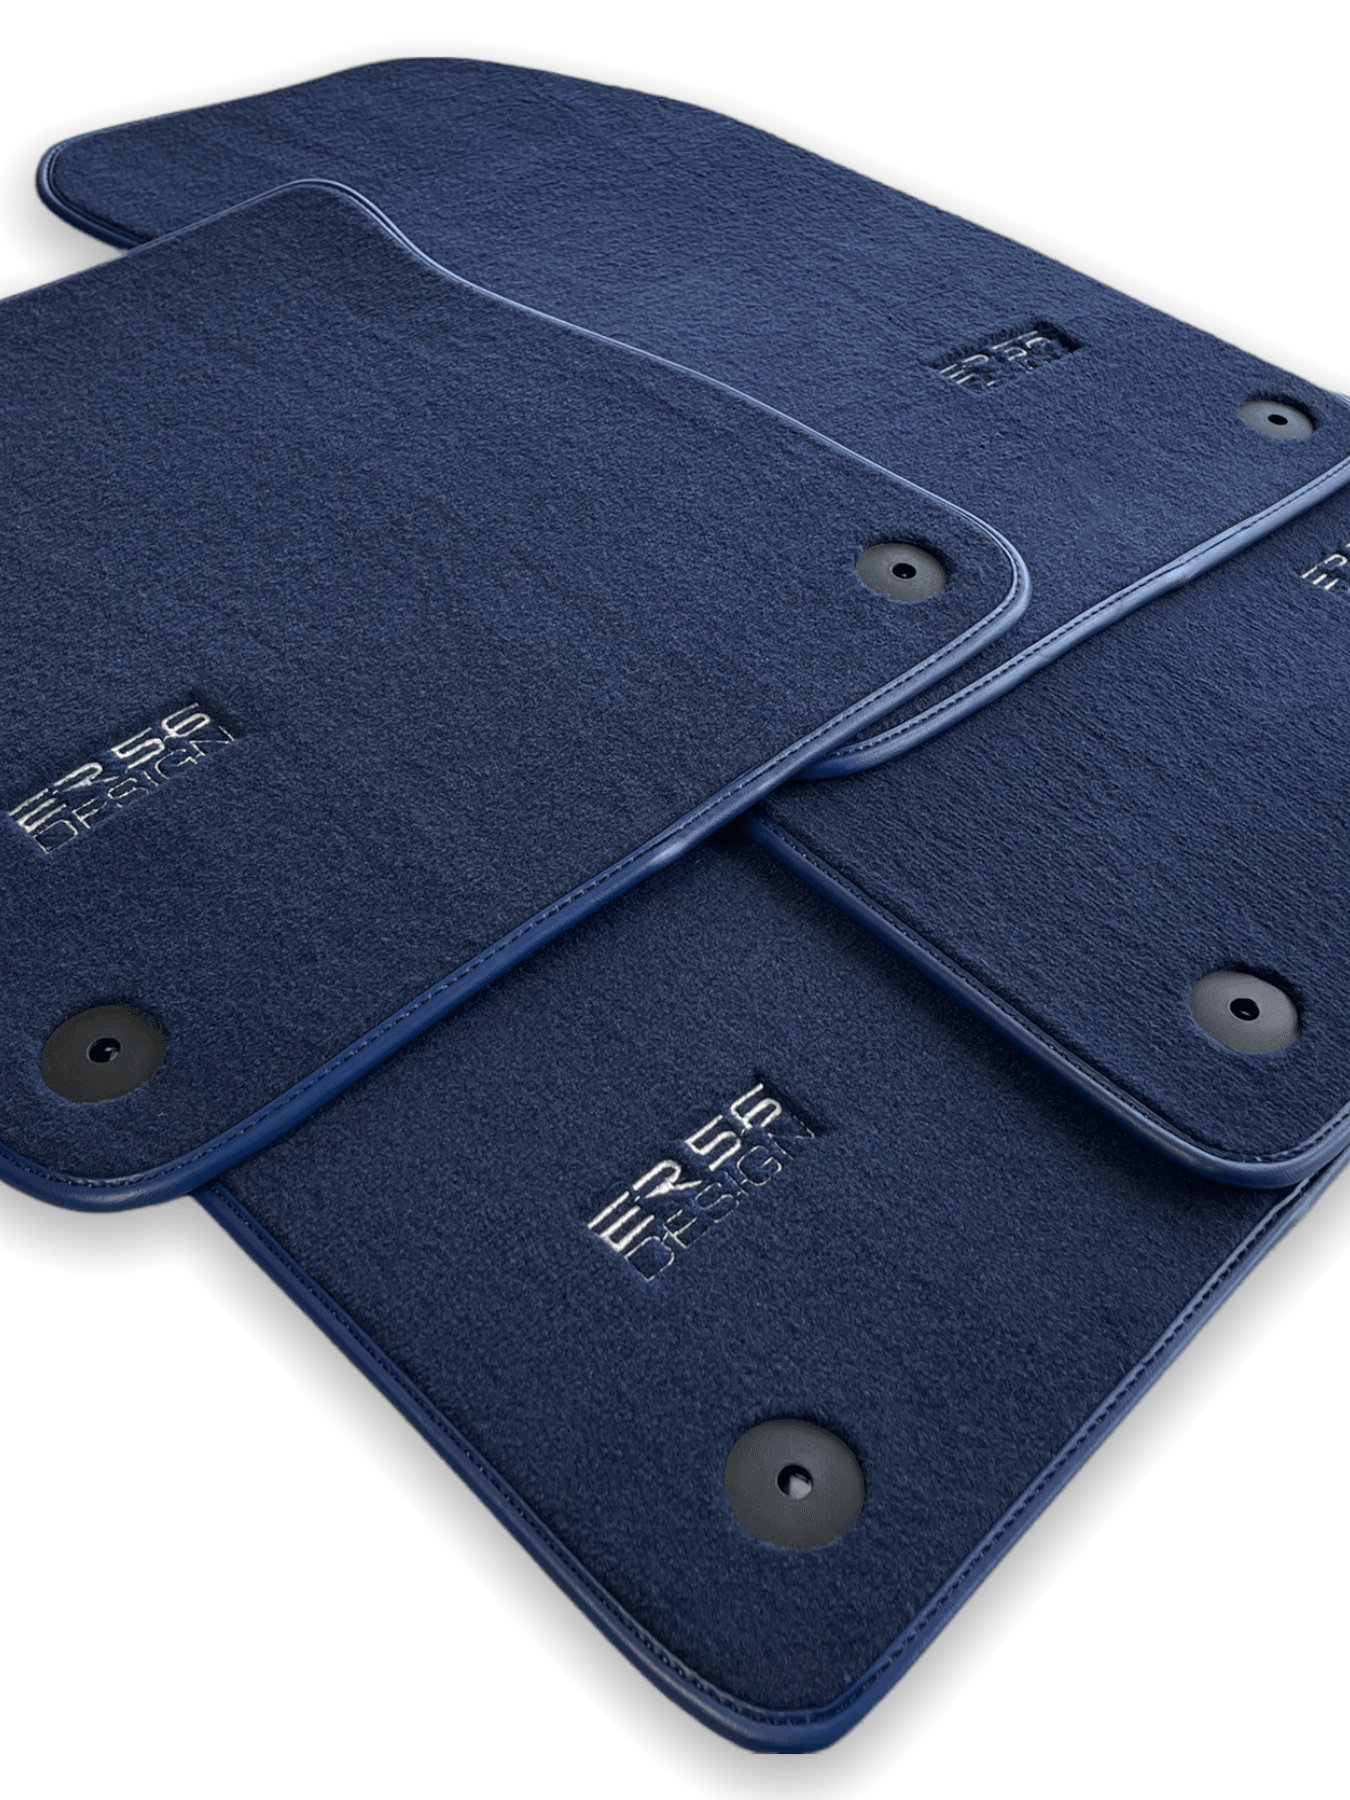 Dark Blue Floor Mats for Audi A8 D4 (2010-2017) | ER56 Design